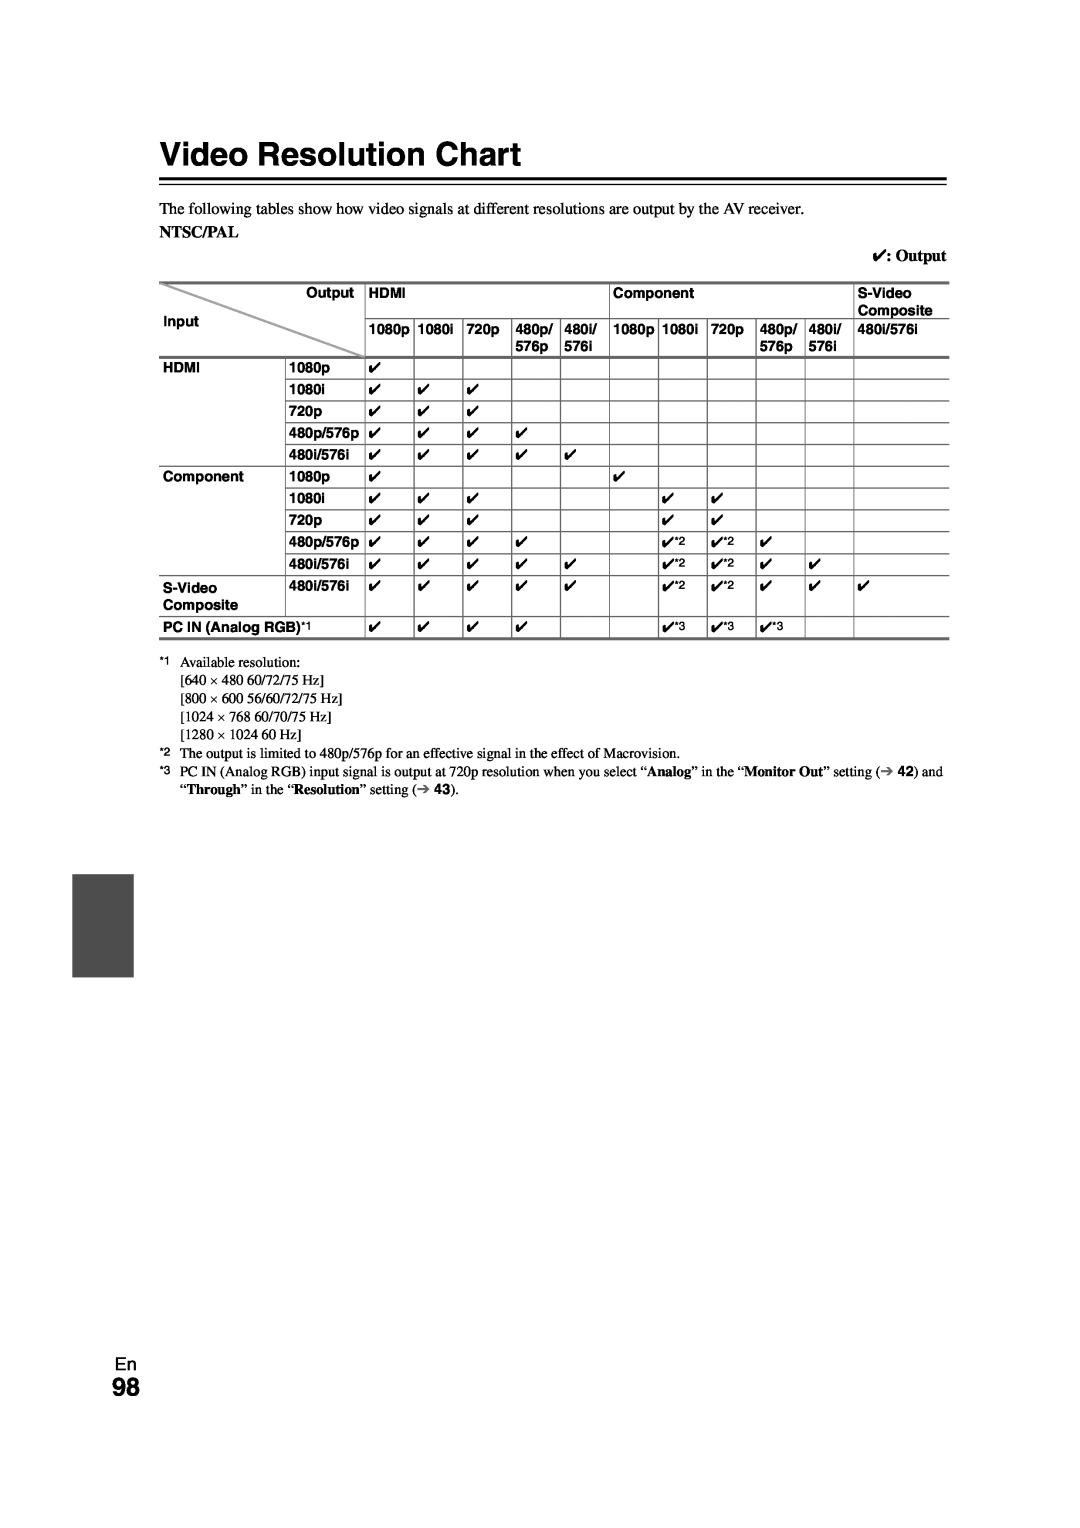 Onkyo TX-NR808 instruction manual Video Resolution Chart, Ntsc/Pal, Output 